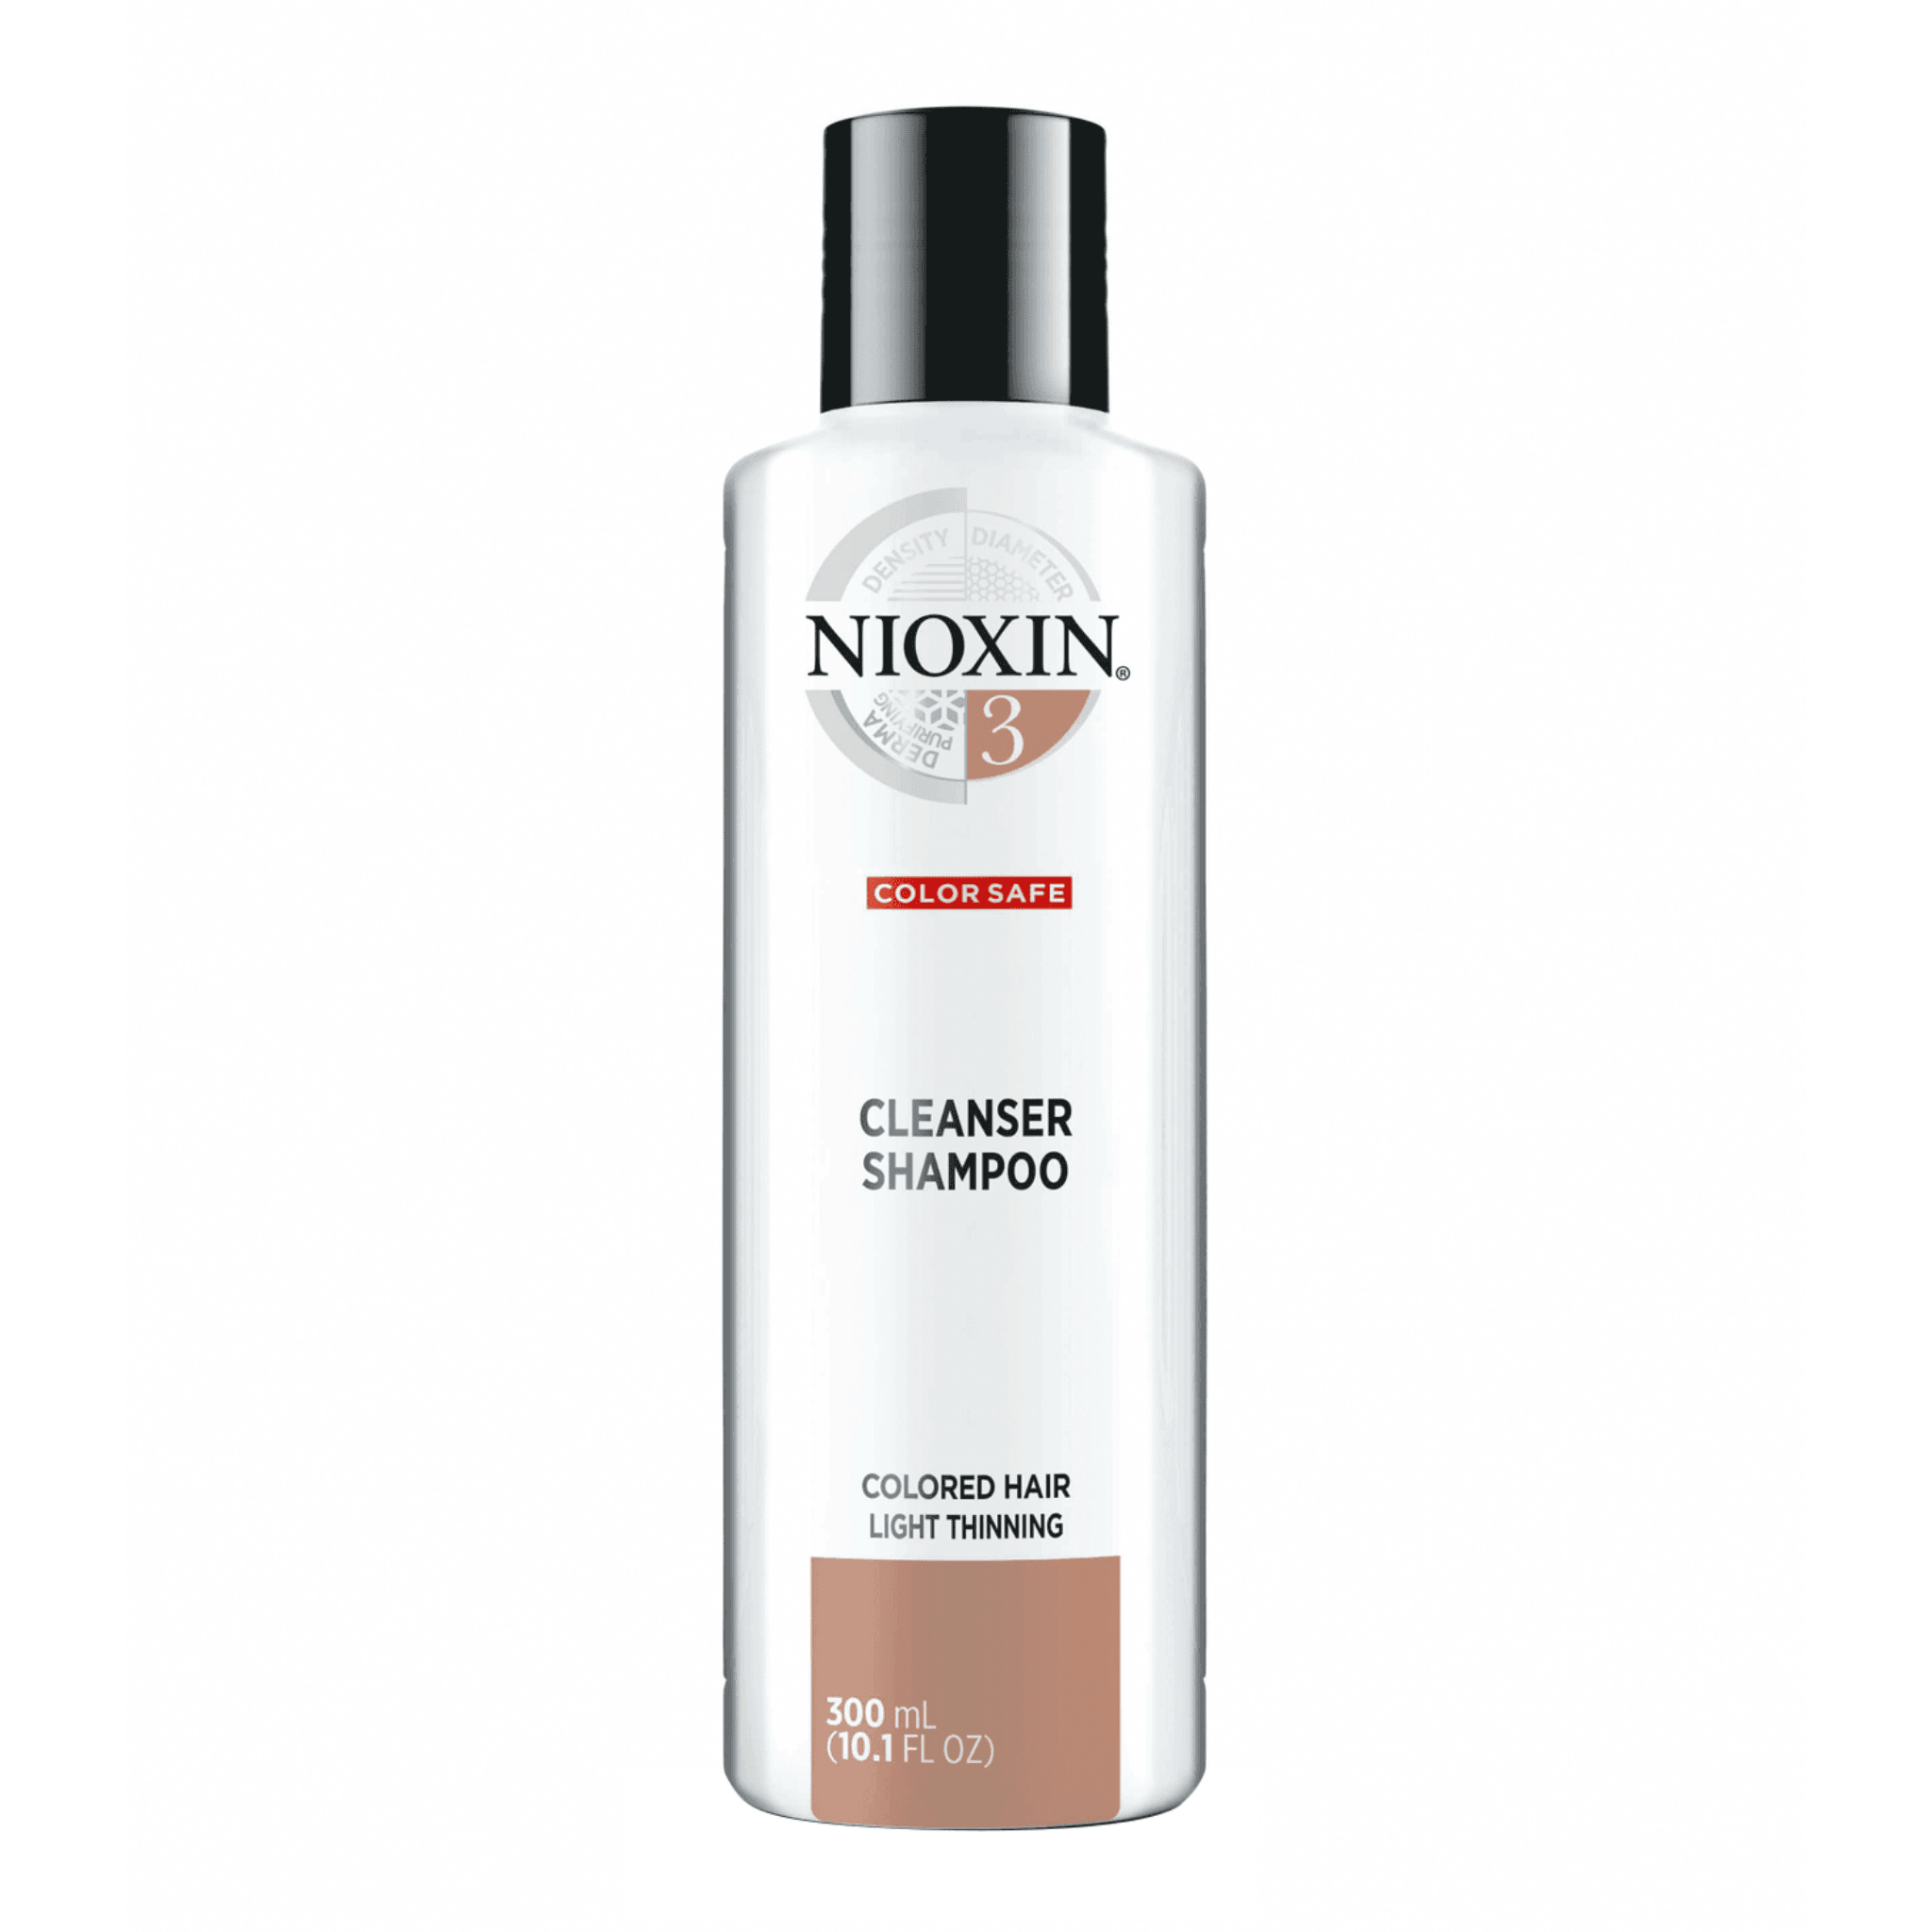 Nioxin. Shampoing Système 3 - 300 ml - Concept C. Shop